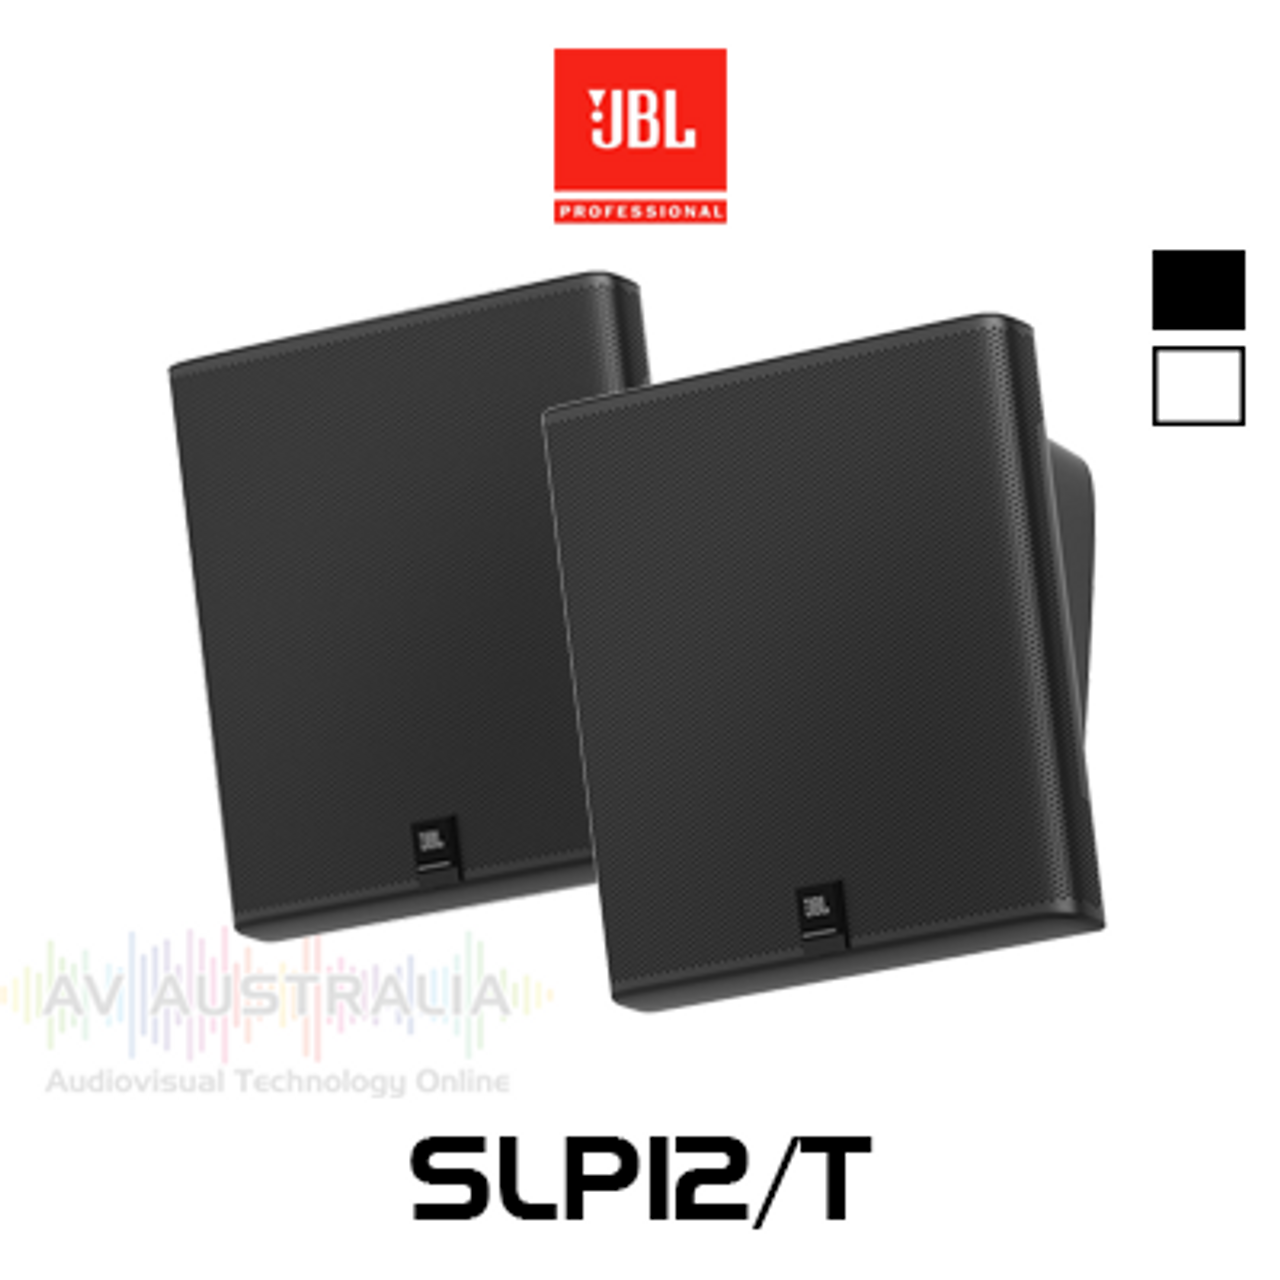 JBL SLP12/T 3" Full-Range 8 ohm 70/100V Low Profile On-Wall Loudspeakers (Pair)